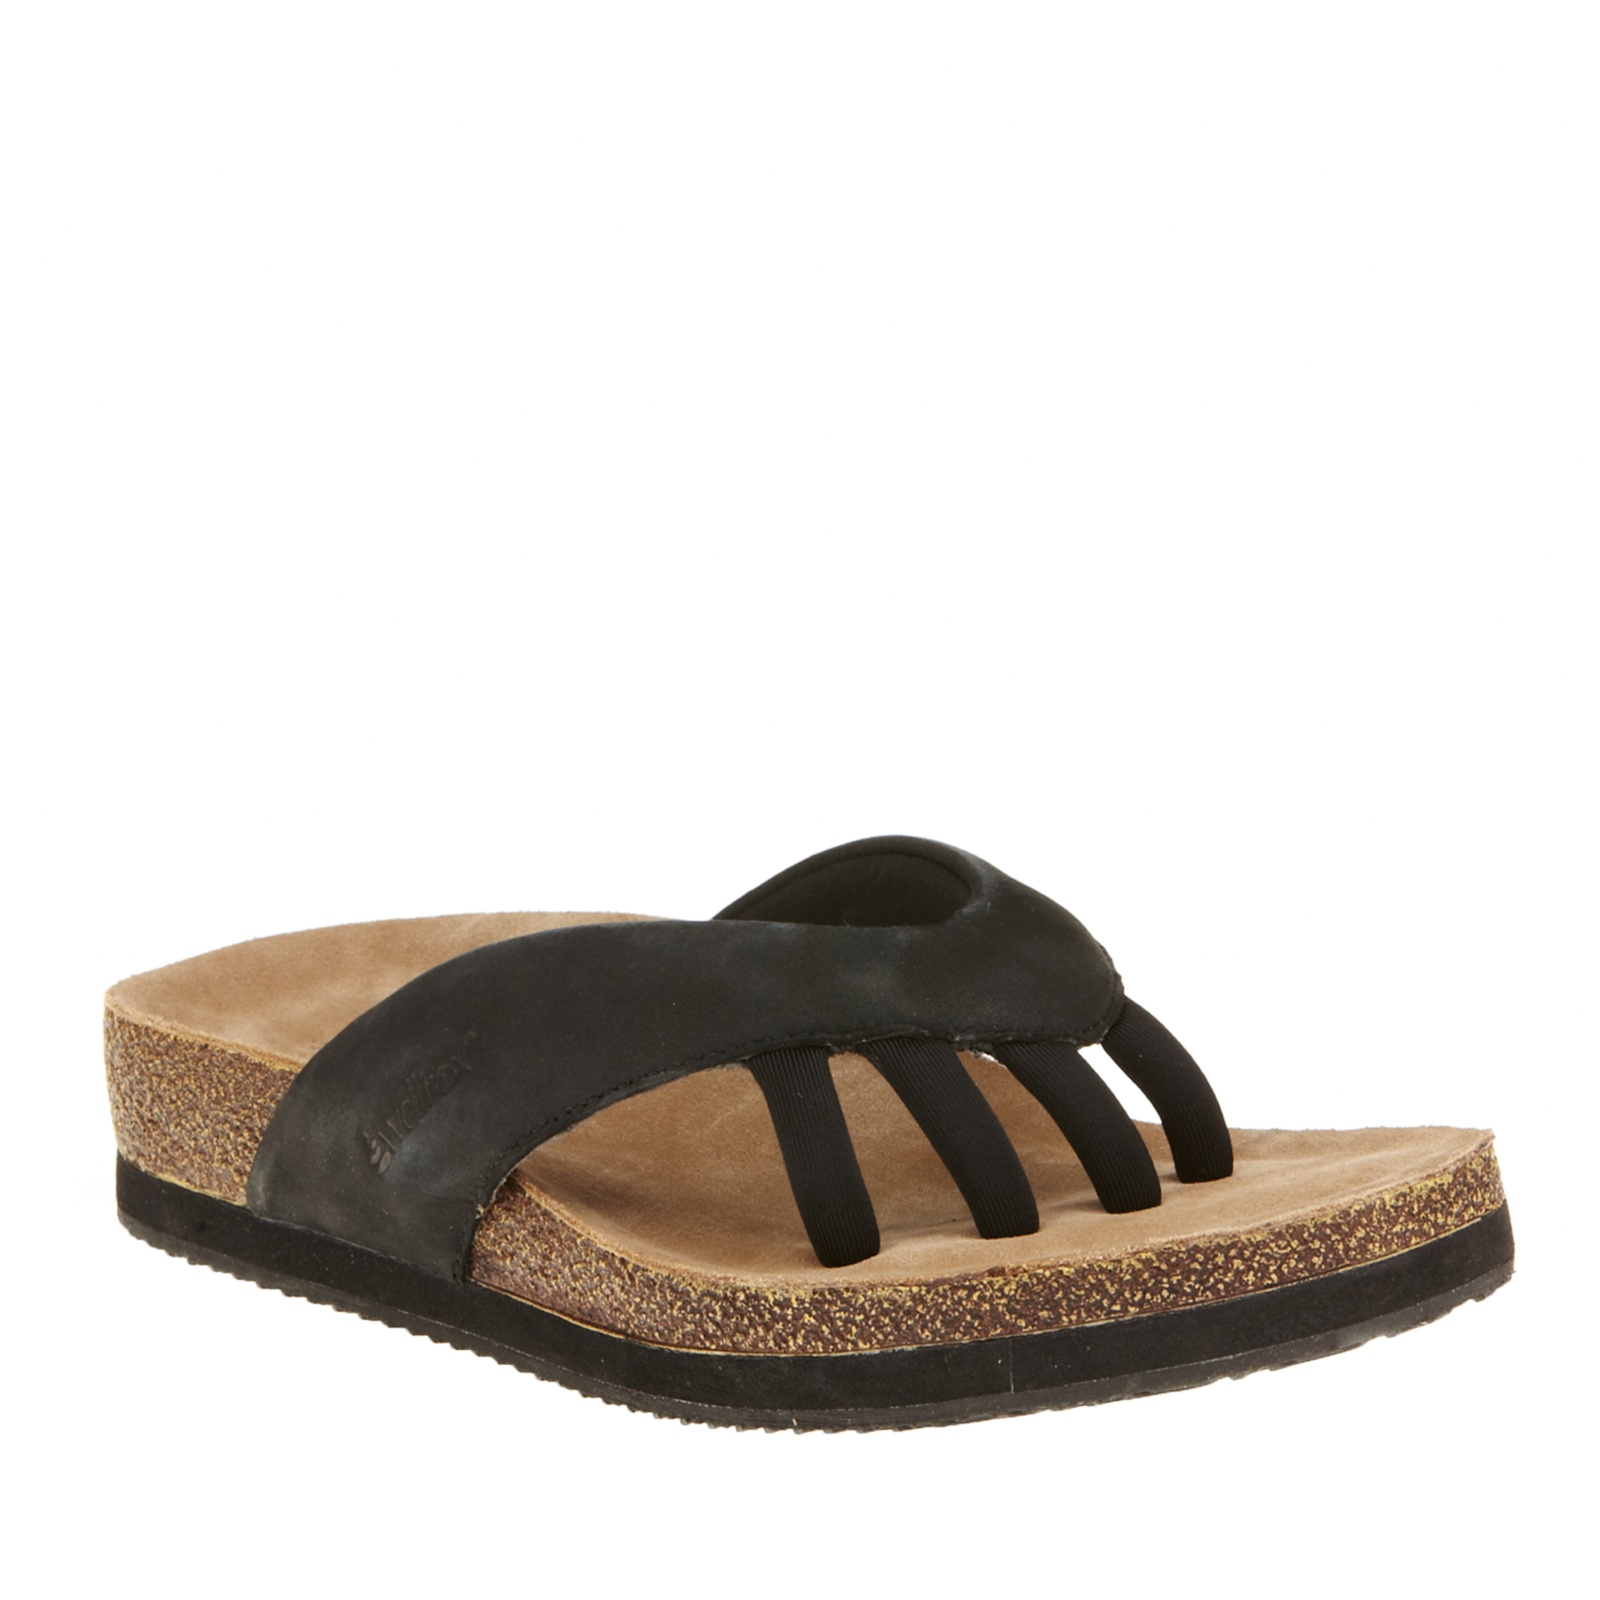 Wellrox Toe Separating Sandal | eBay